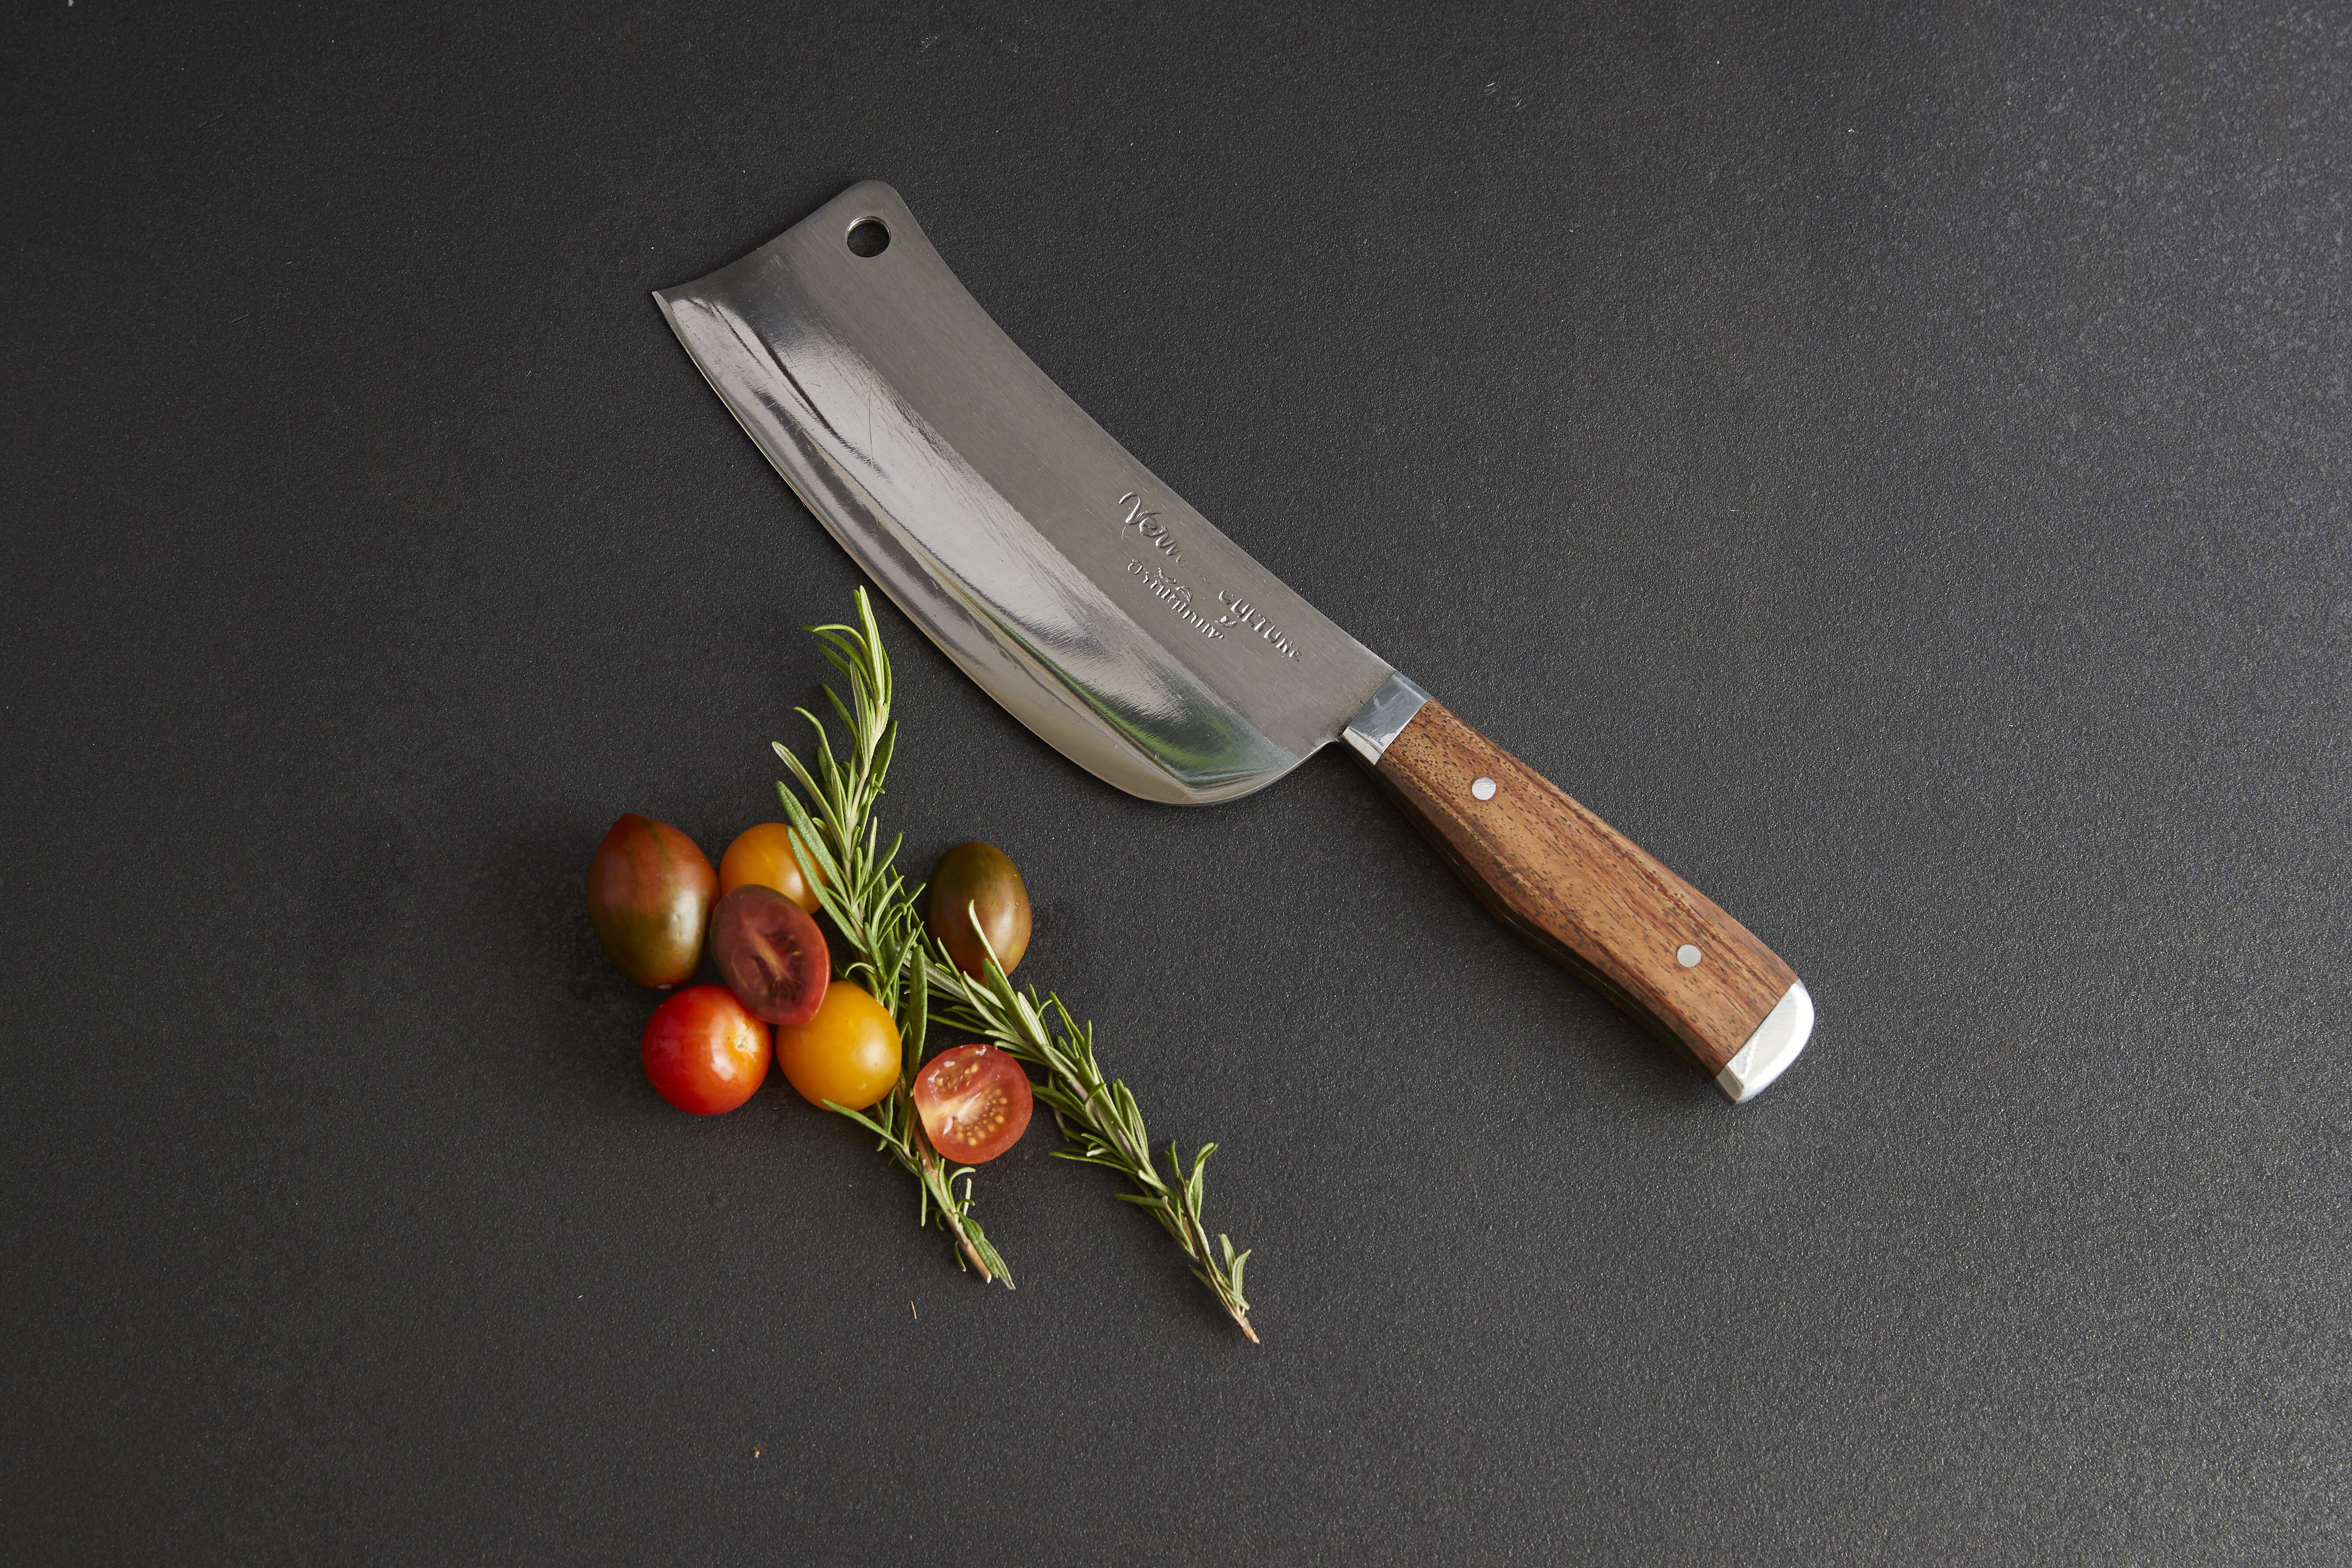 Japanese Santoku Kitchen Knife Set – Jean Patrique Professional